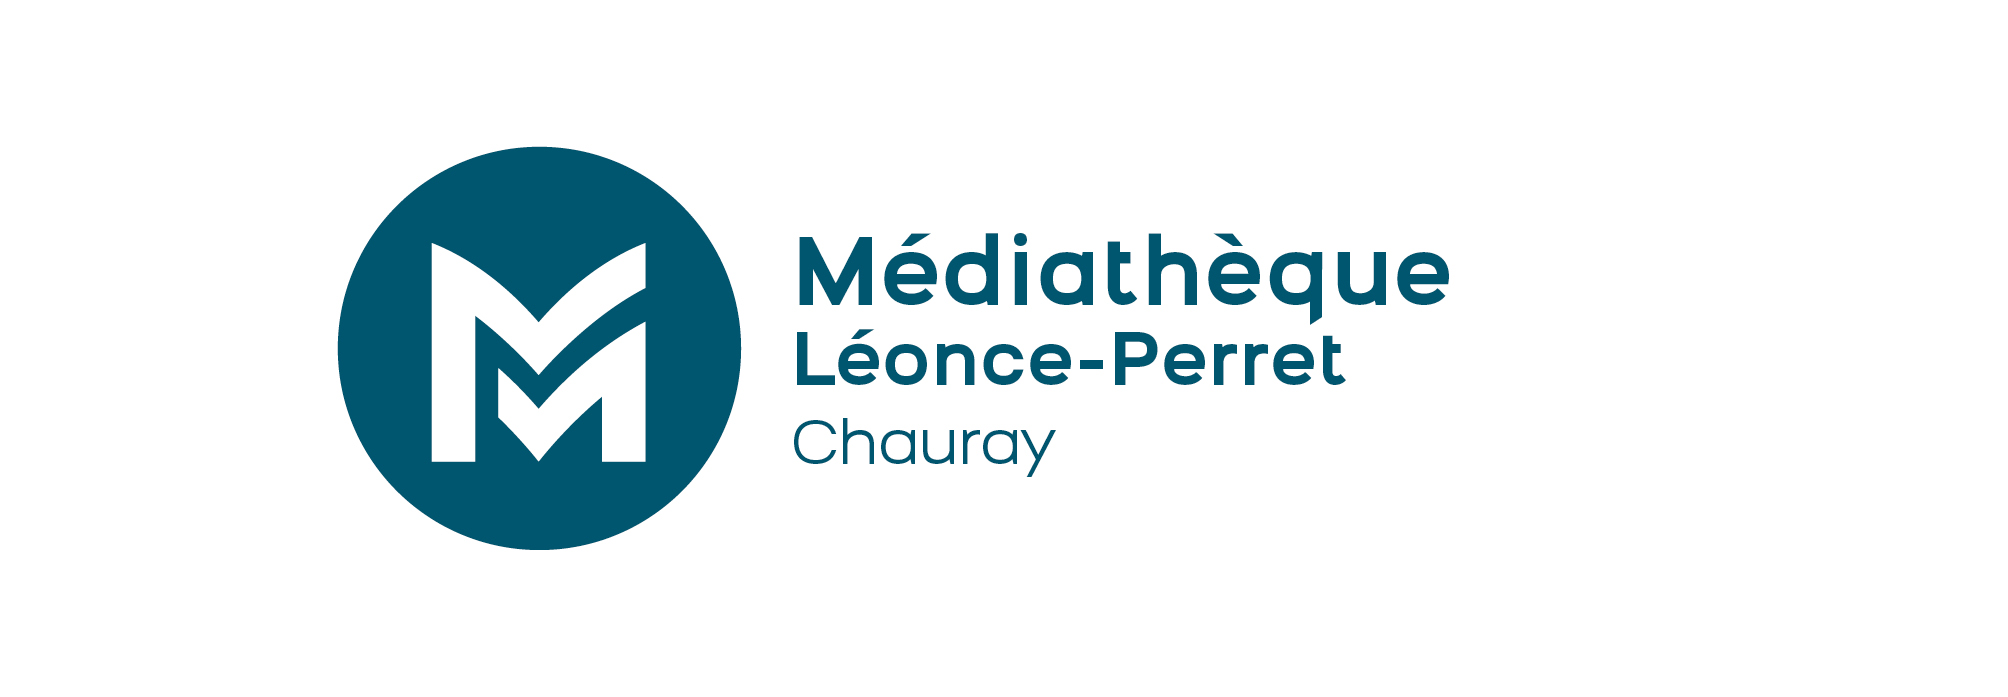 Médiathèque Chauray